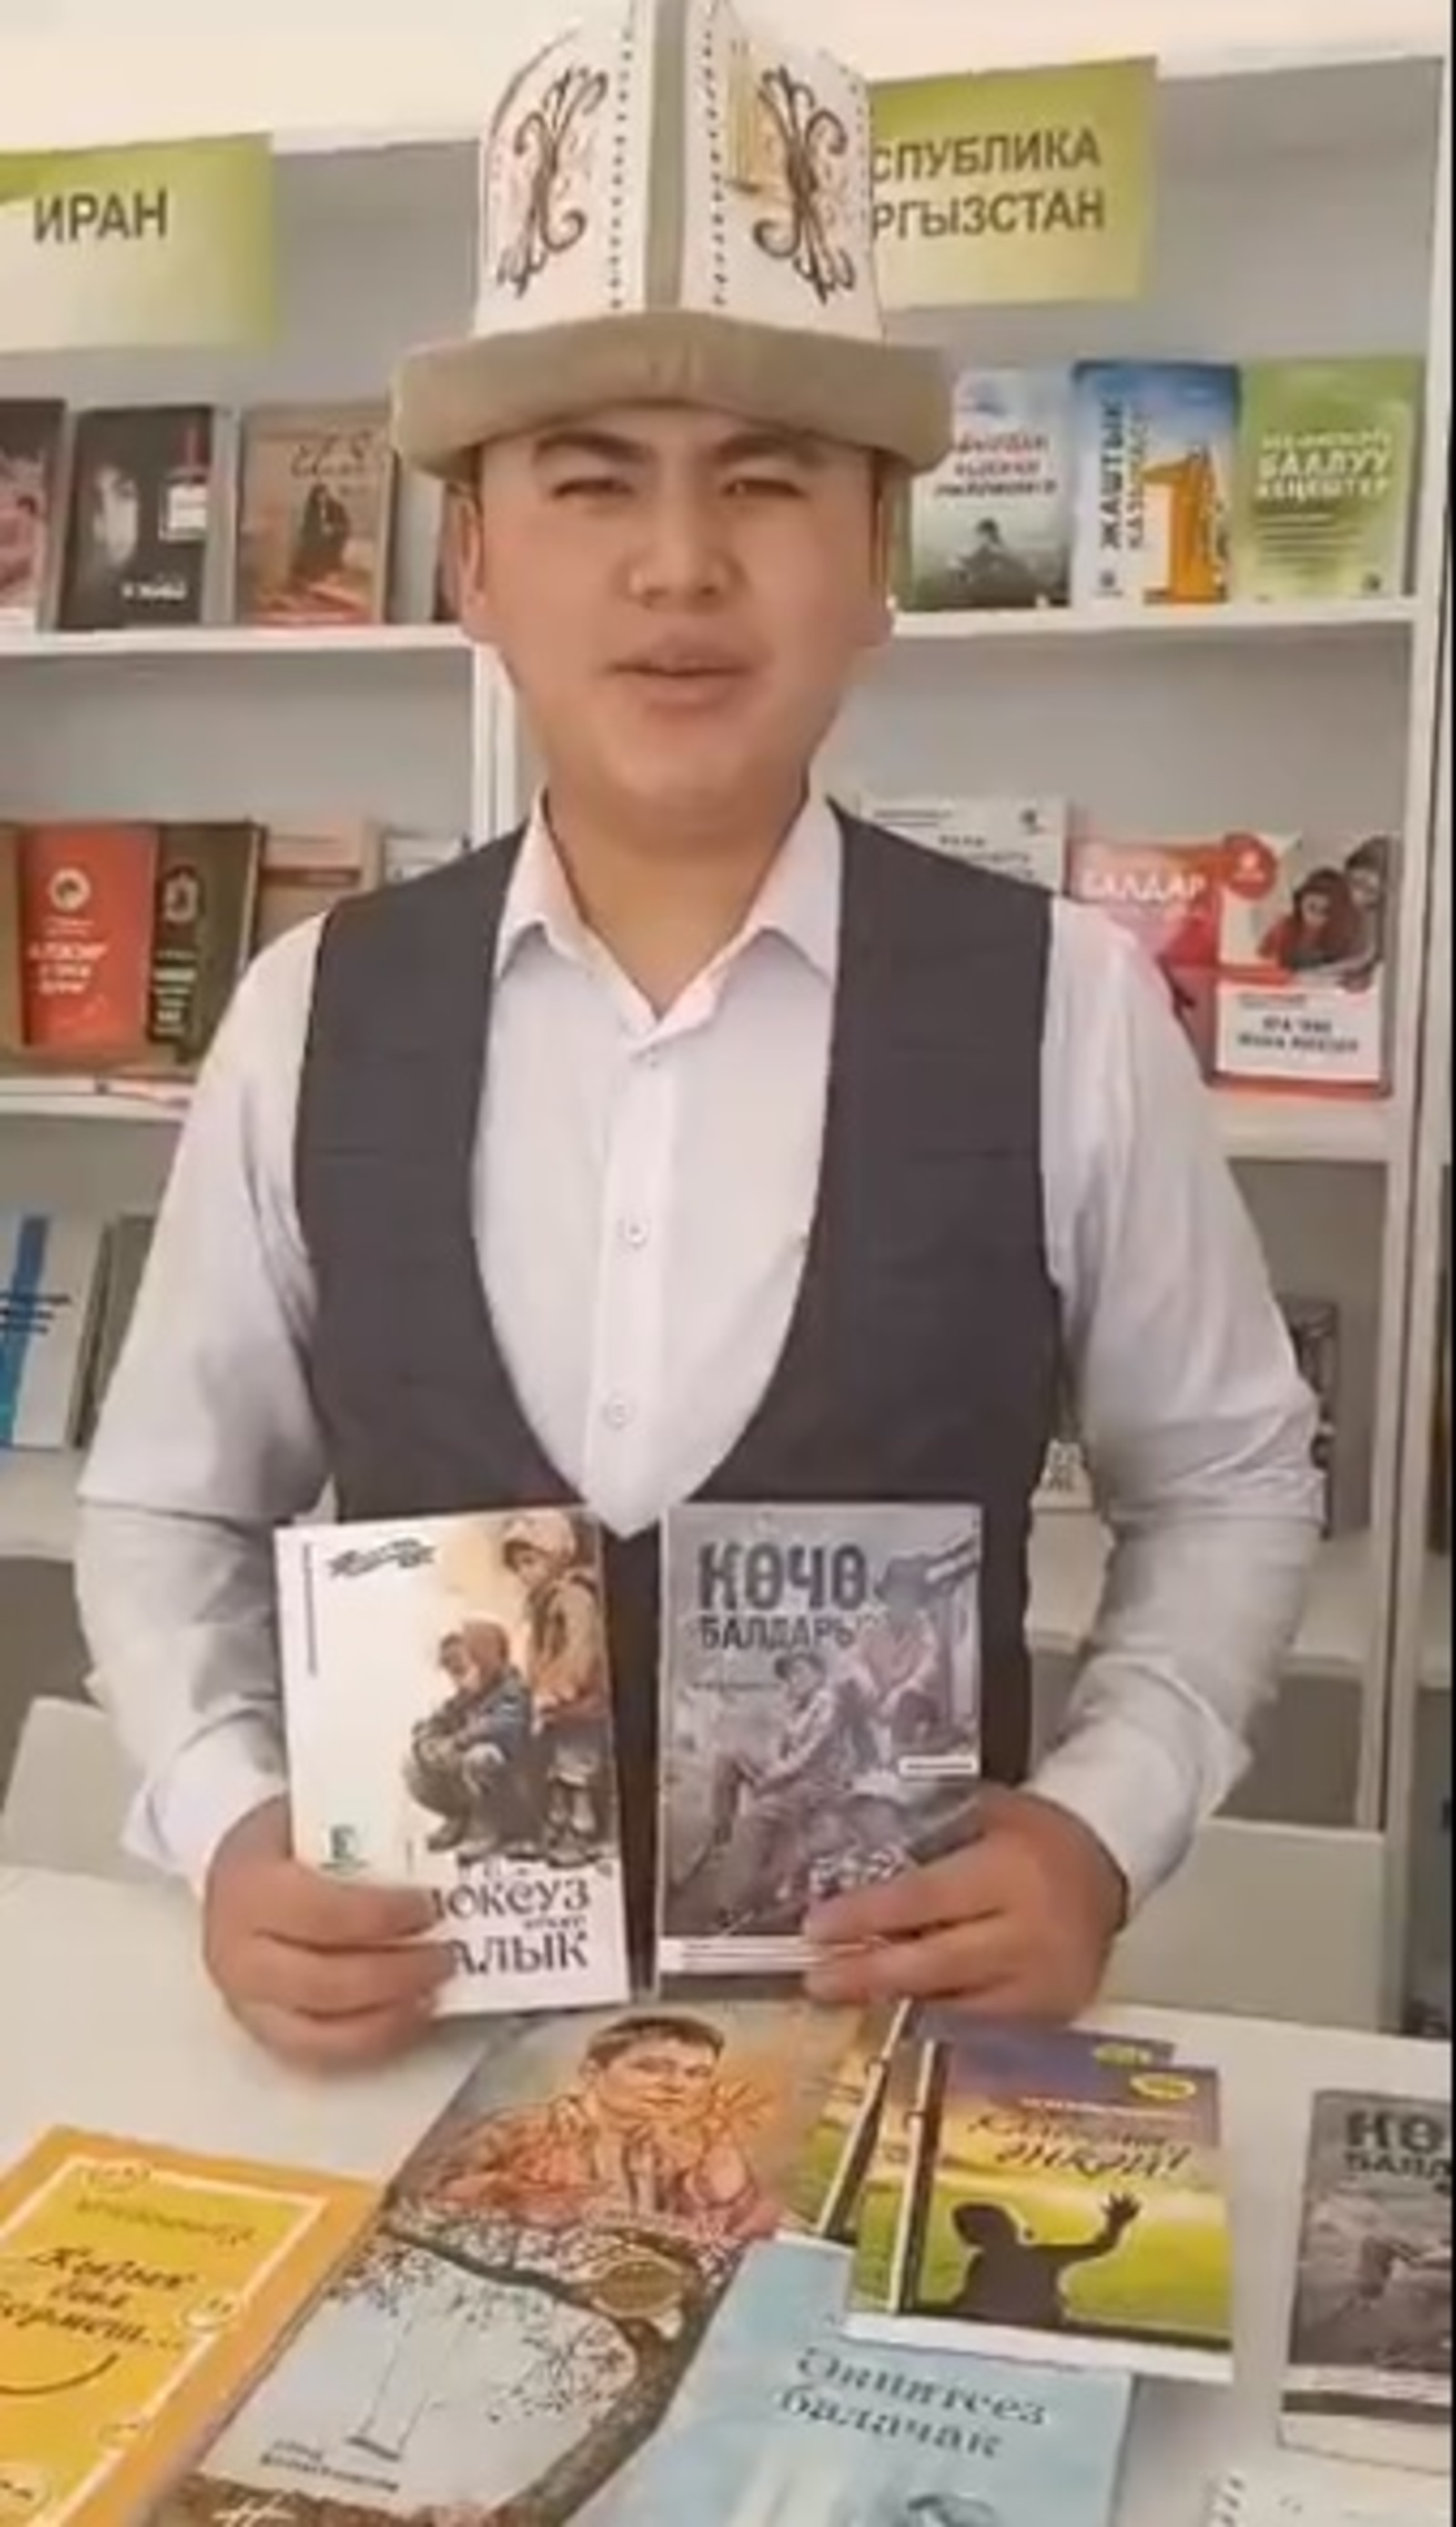 Книги Айгиза Баймухаметова популярны в Кыргызстане